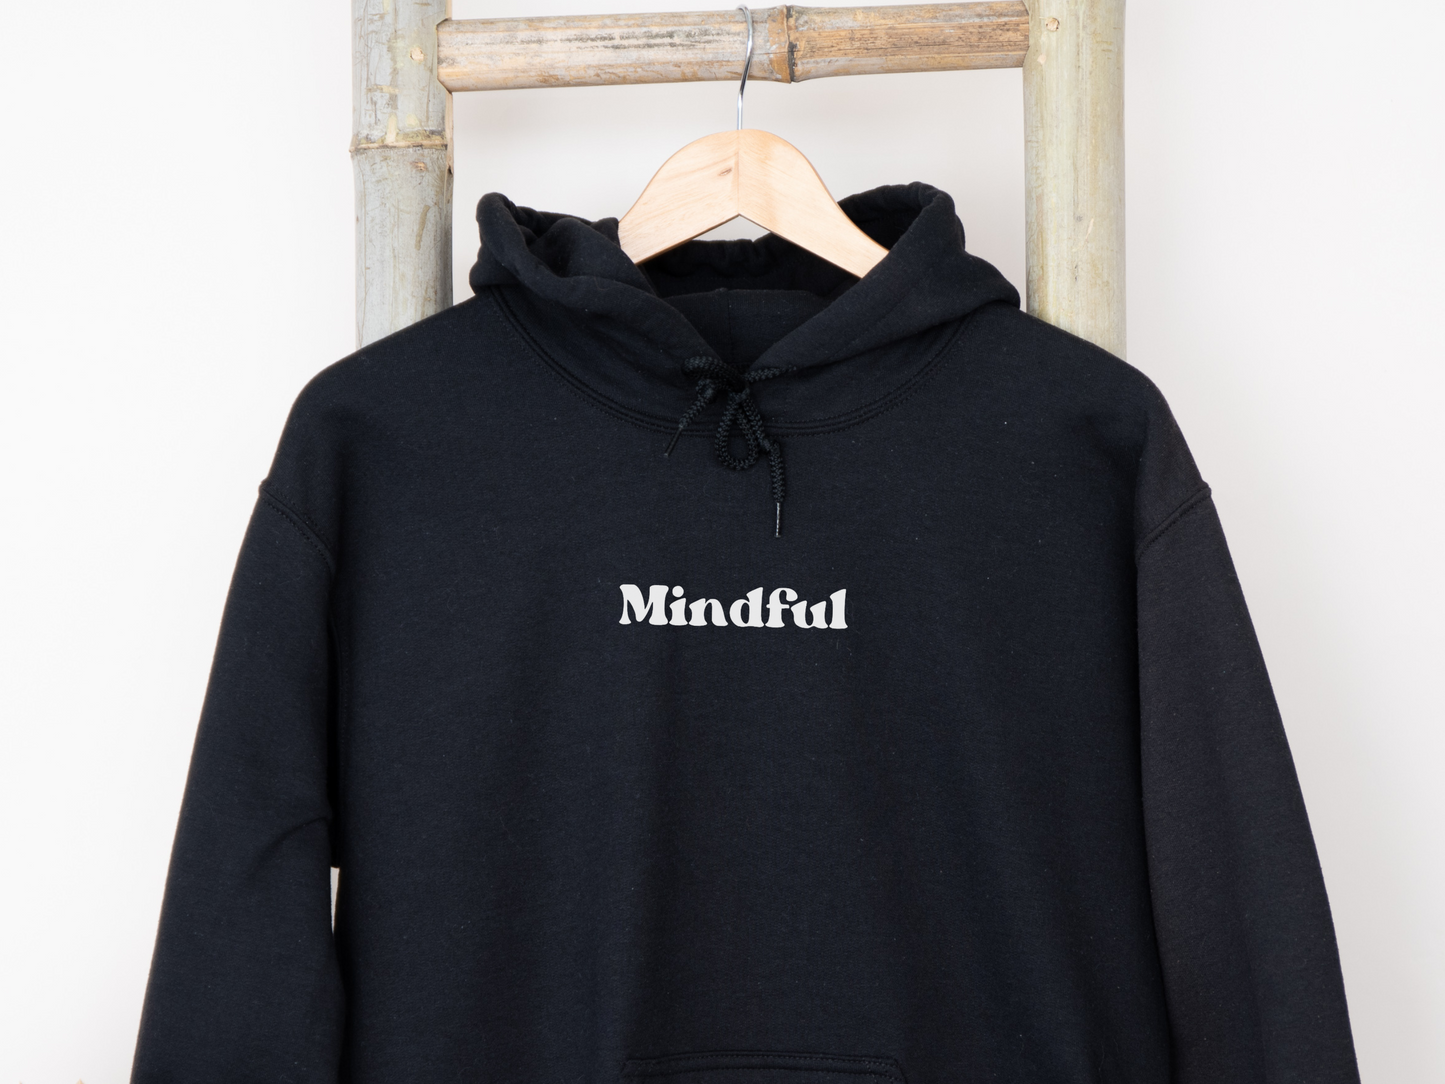 Mindful Sweatshirt, Breathe In Breathe Out on Sleeve